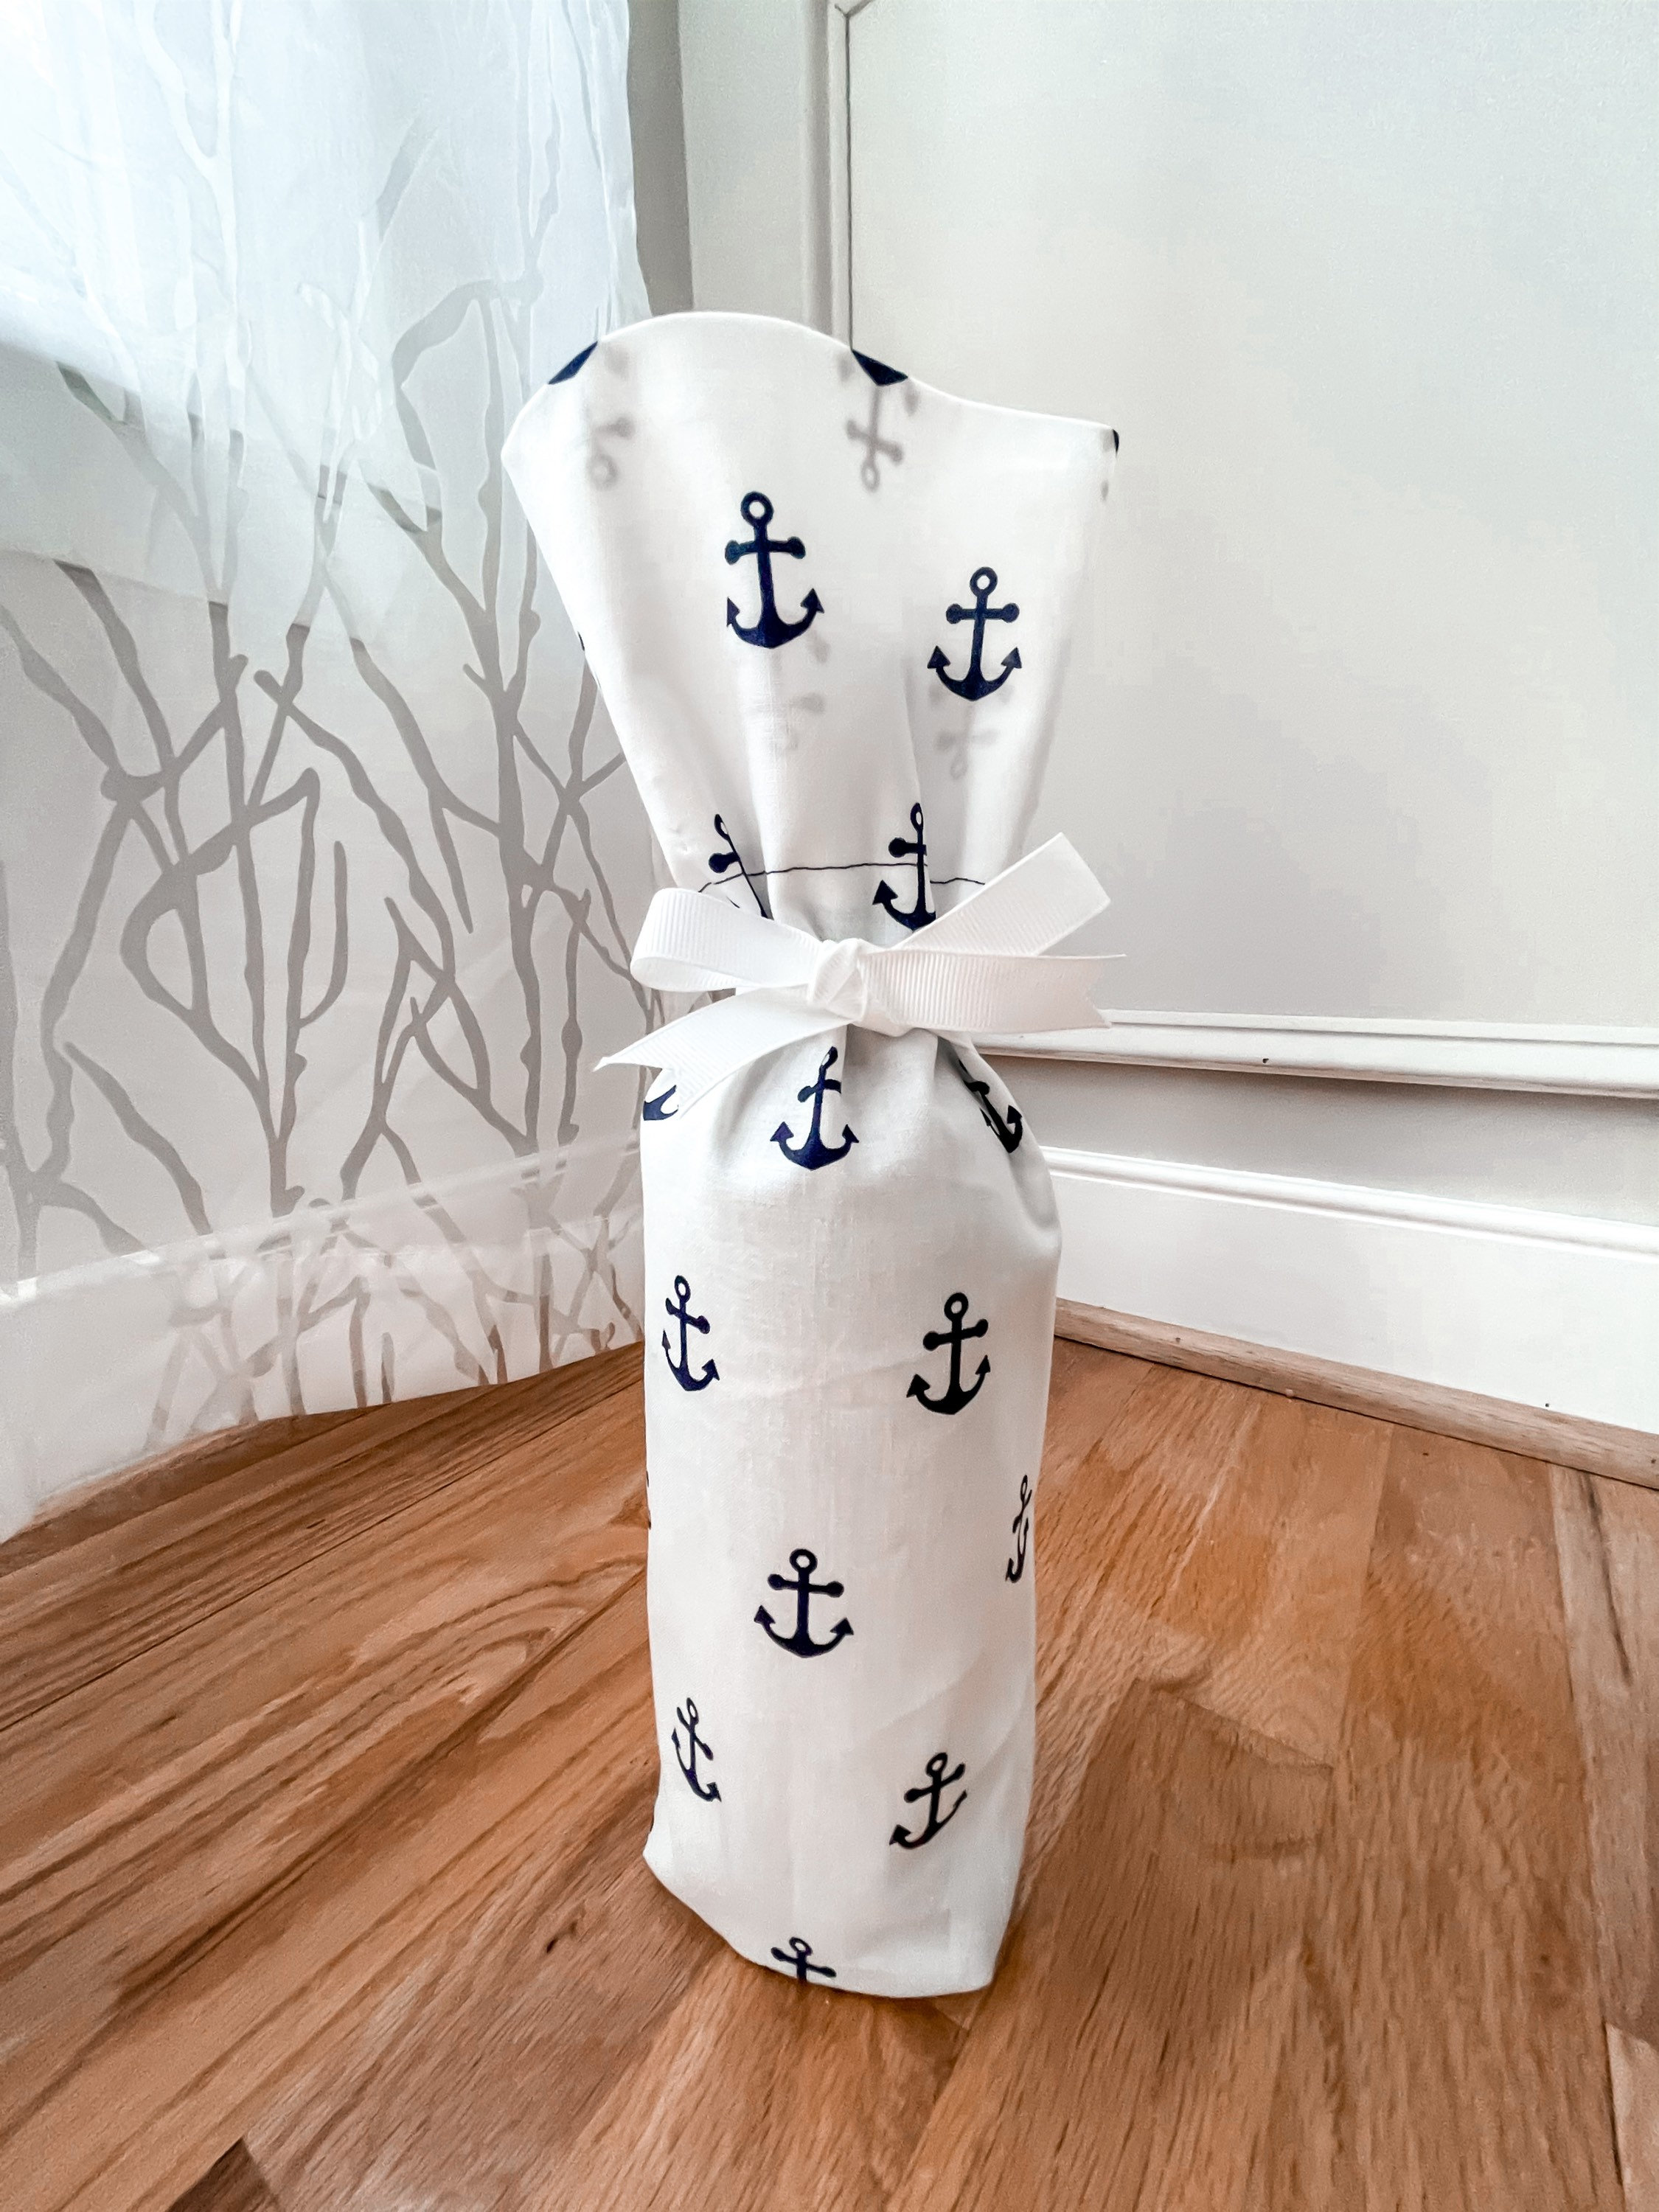 Seas The Wine Bag Accessory Canvas Leather Nautical Ocean Anchor Decor Home Gift